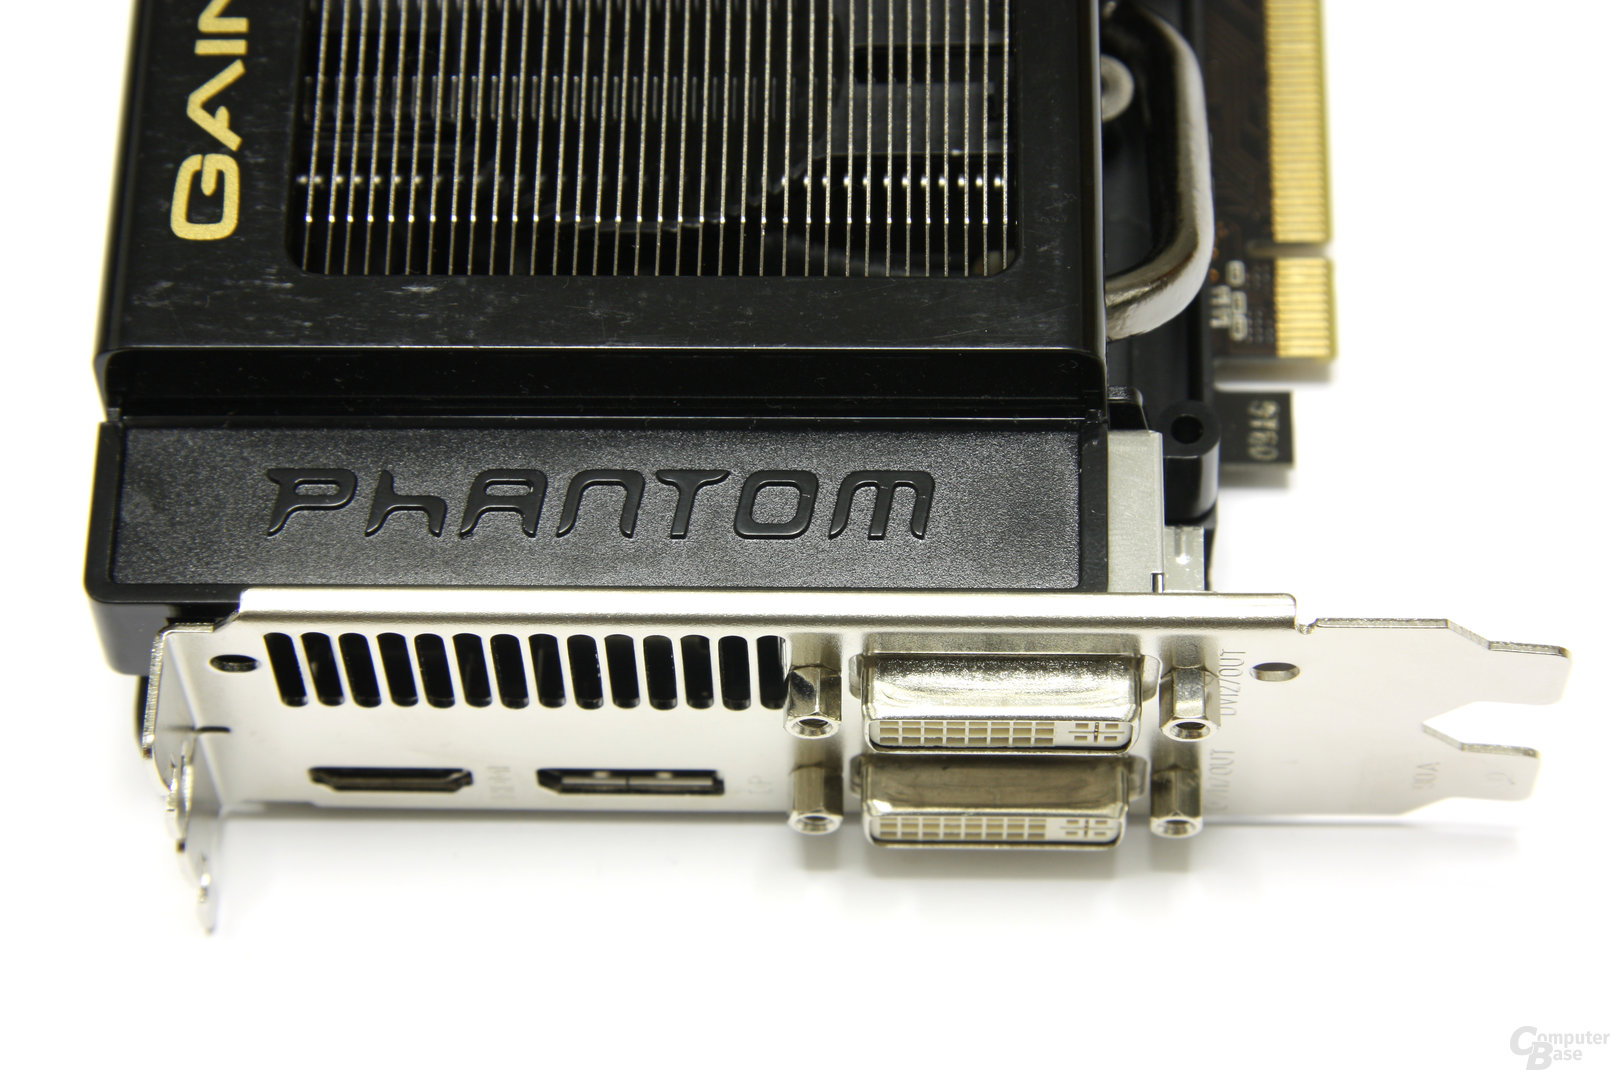 GeForce GTX 580 Phantom Anschlüsse